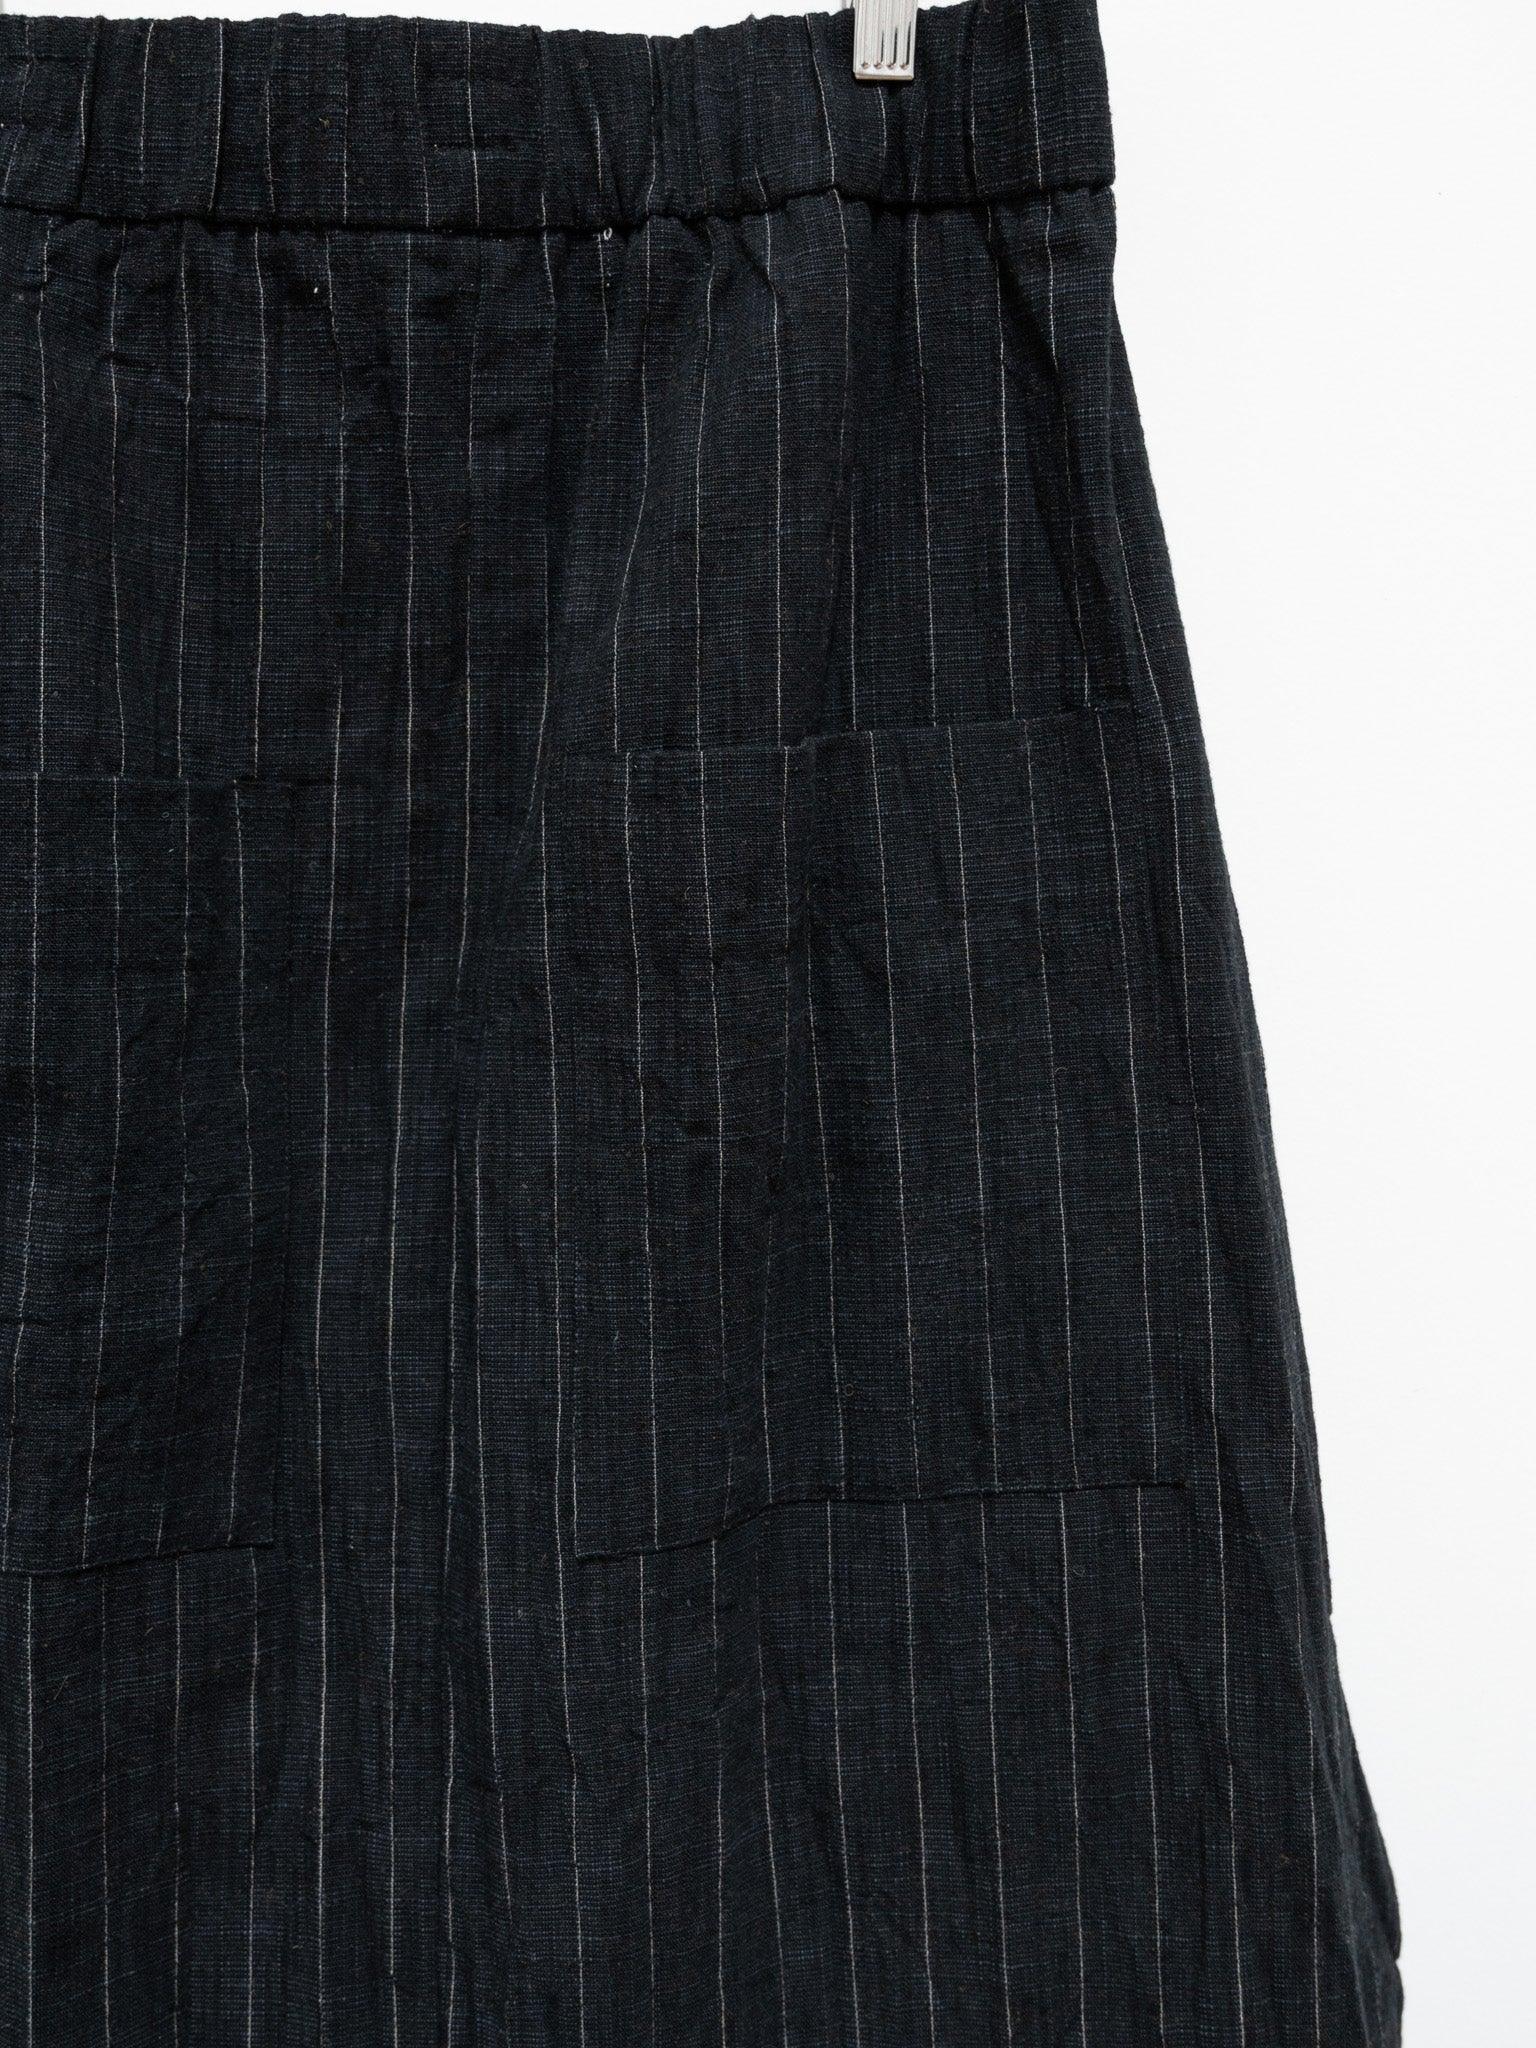 Namu Shop   Album Di Famiglia Pinstripe Skirt   Black restocked